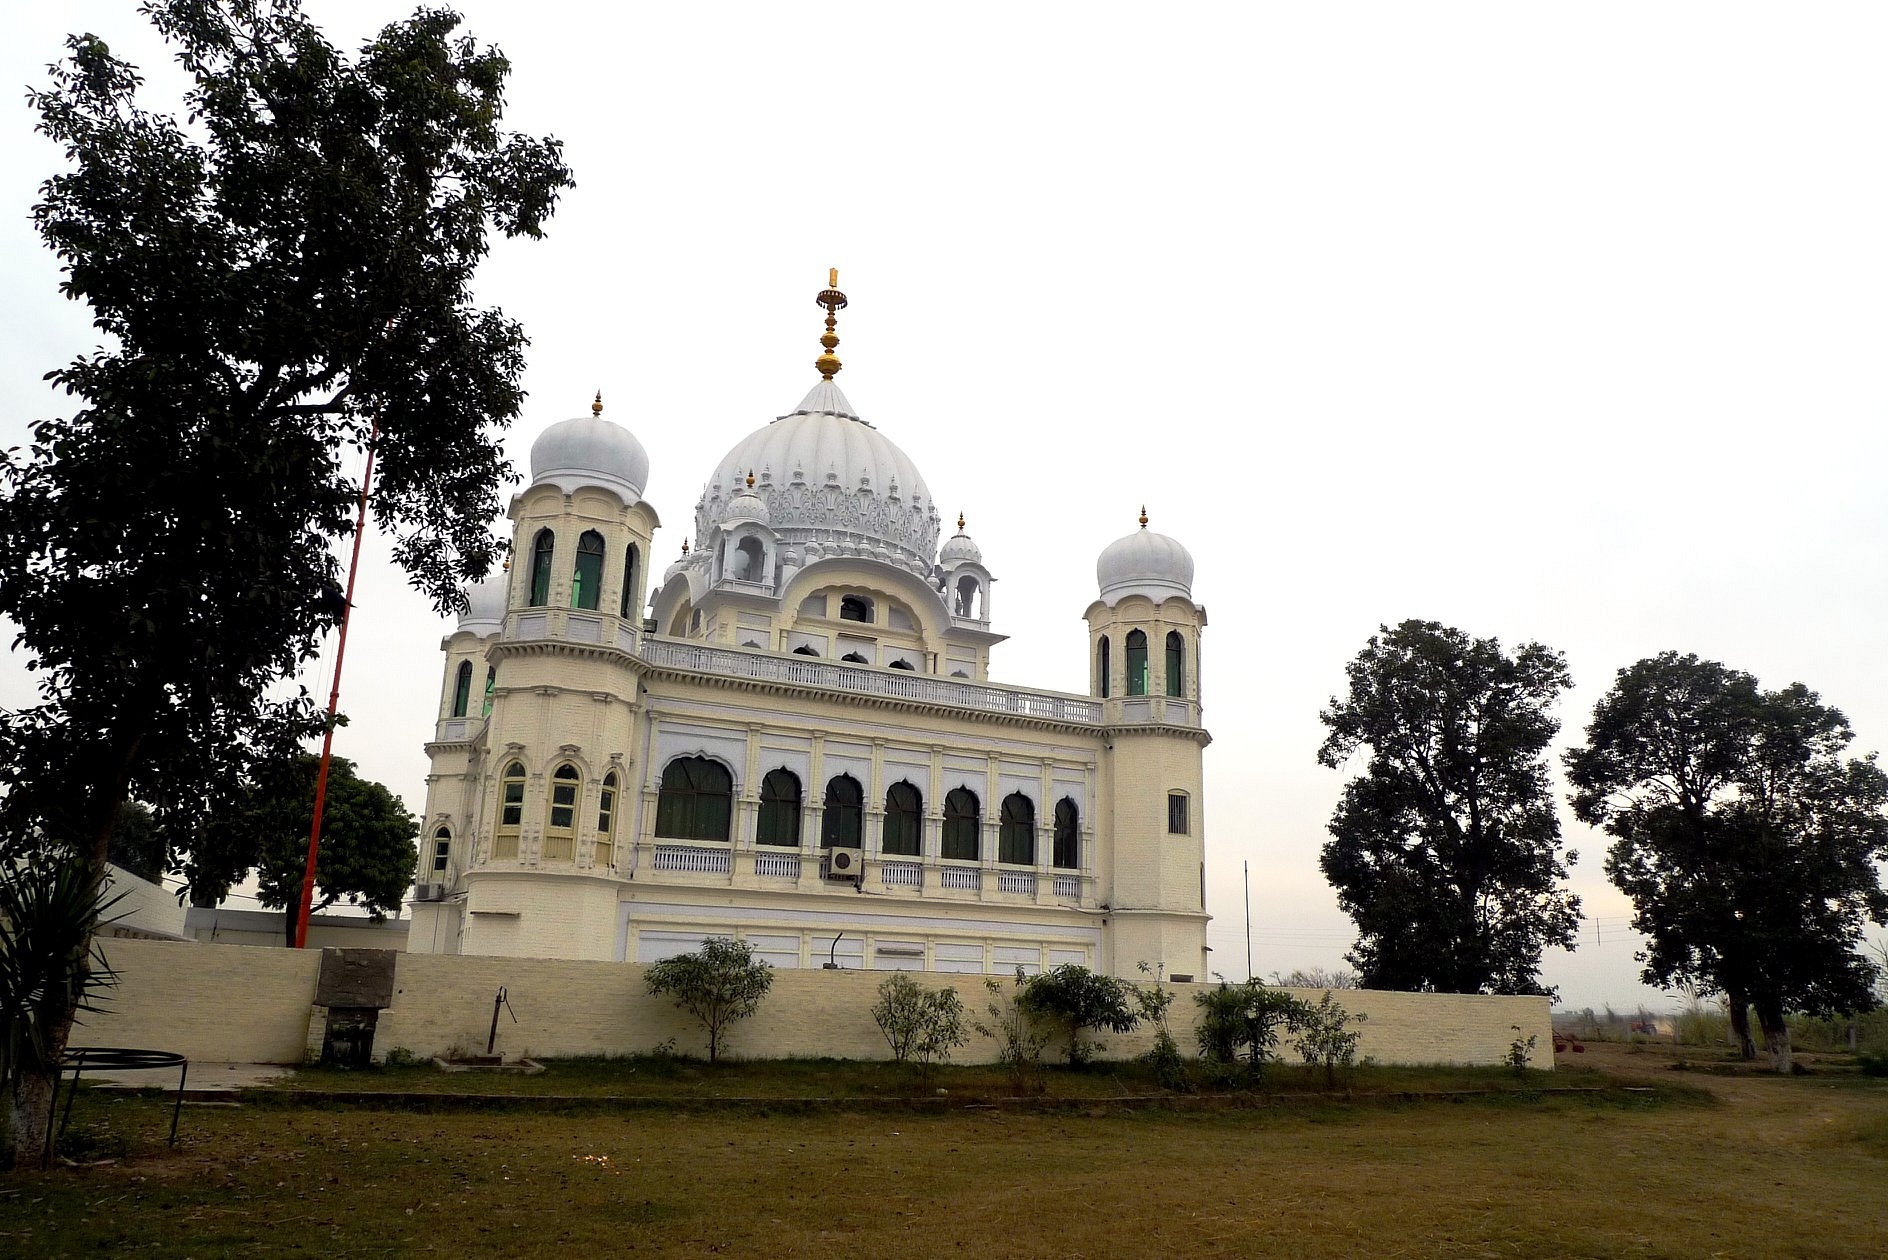 Kartarpur Sahib in Pakistan (Image Copyright: Amarjit Chandan)